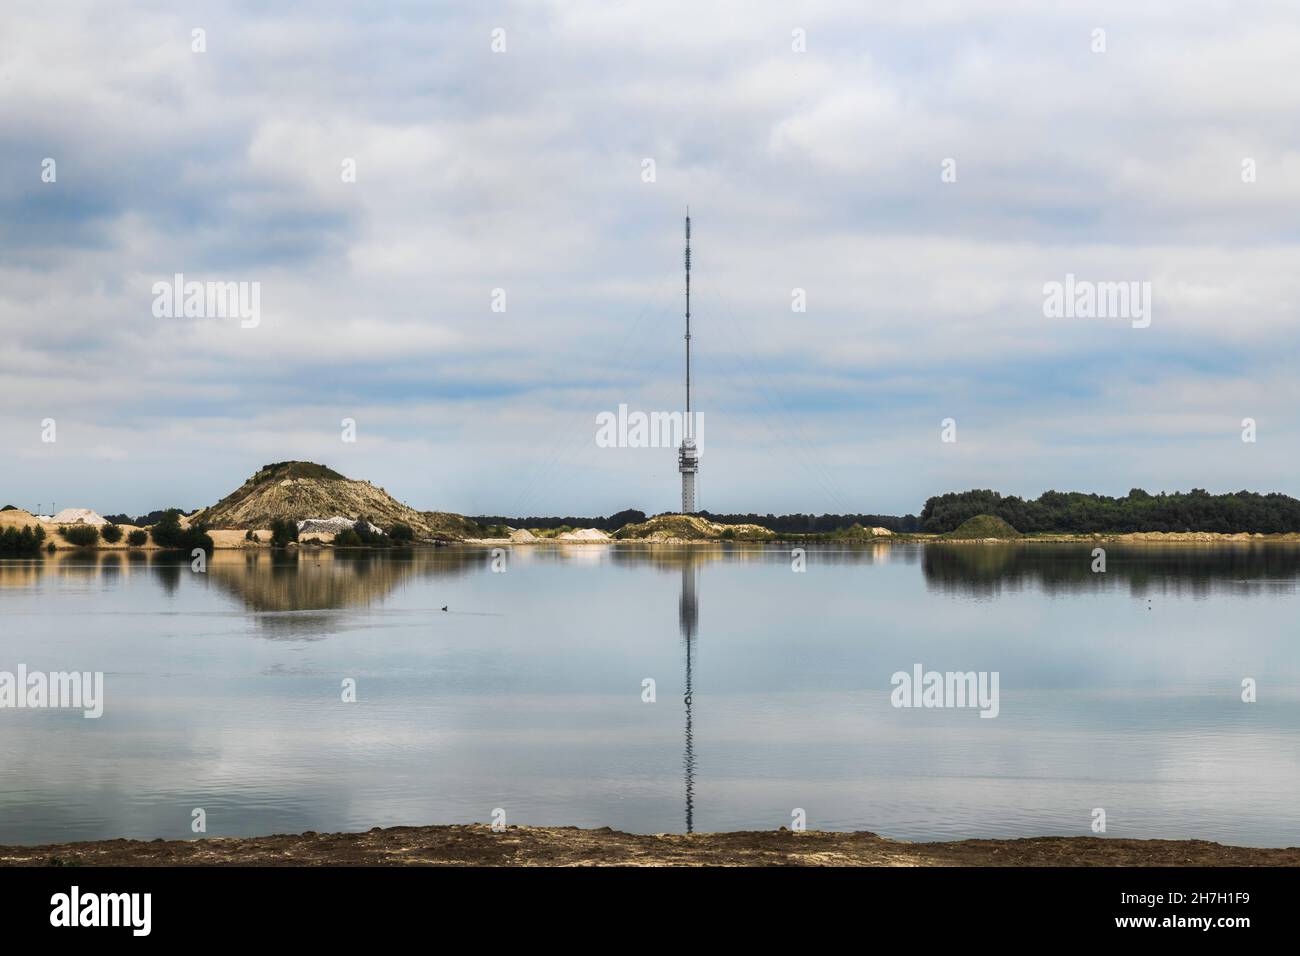 fernsehturm-Antennen in hoogersmidde in holland Stockfoto